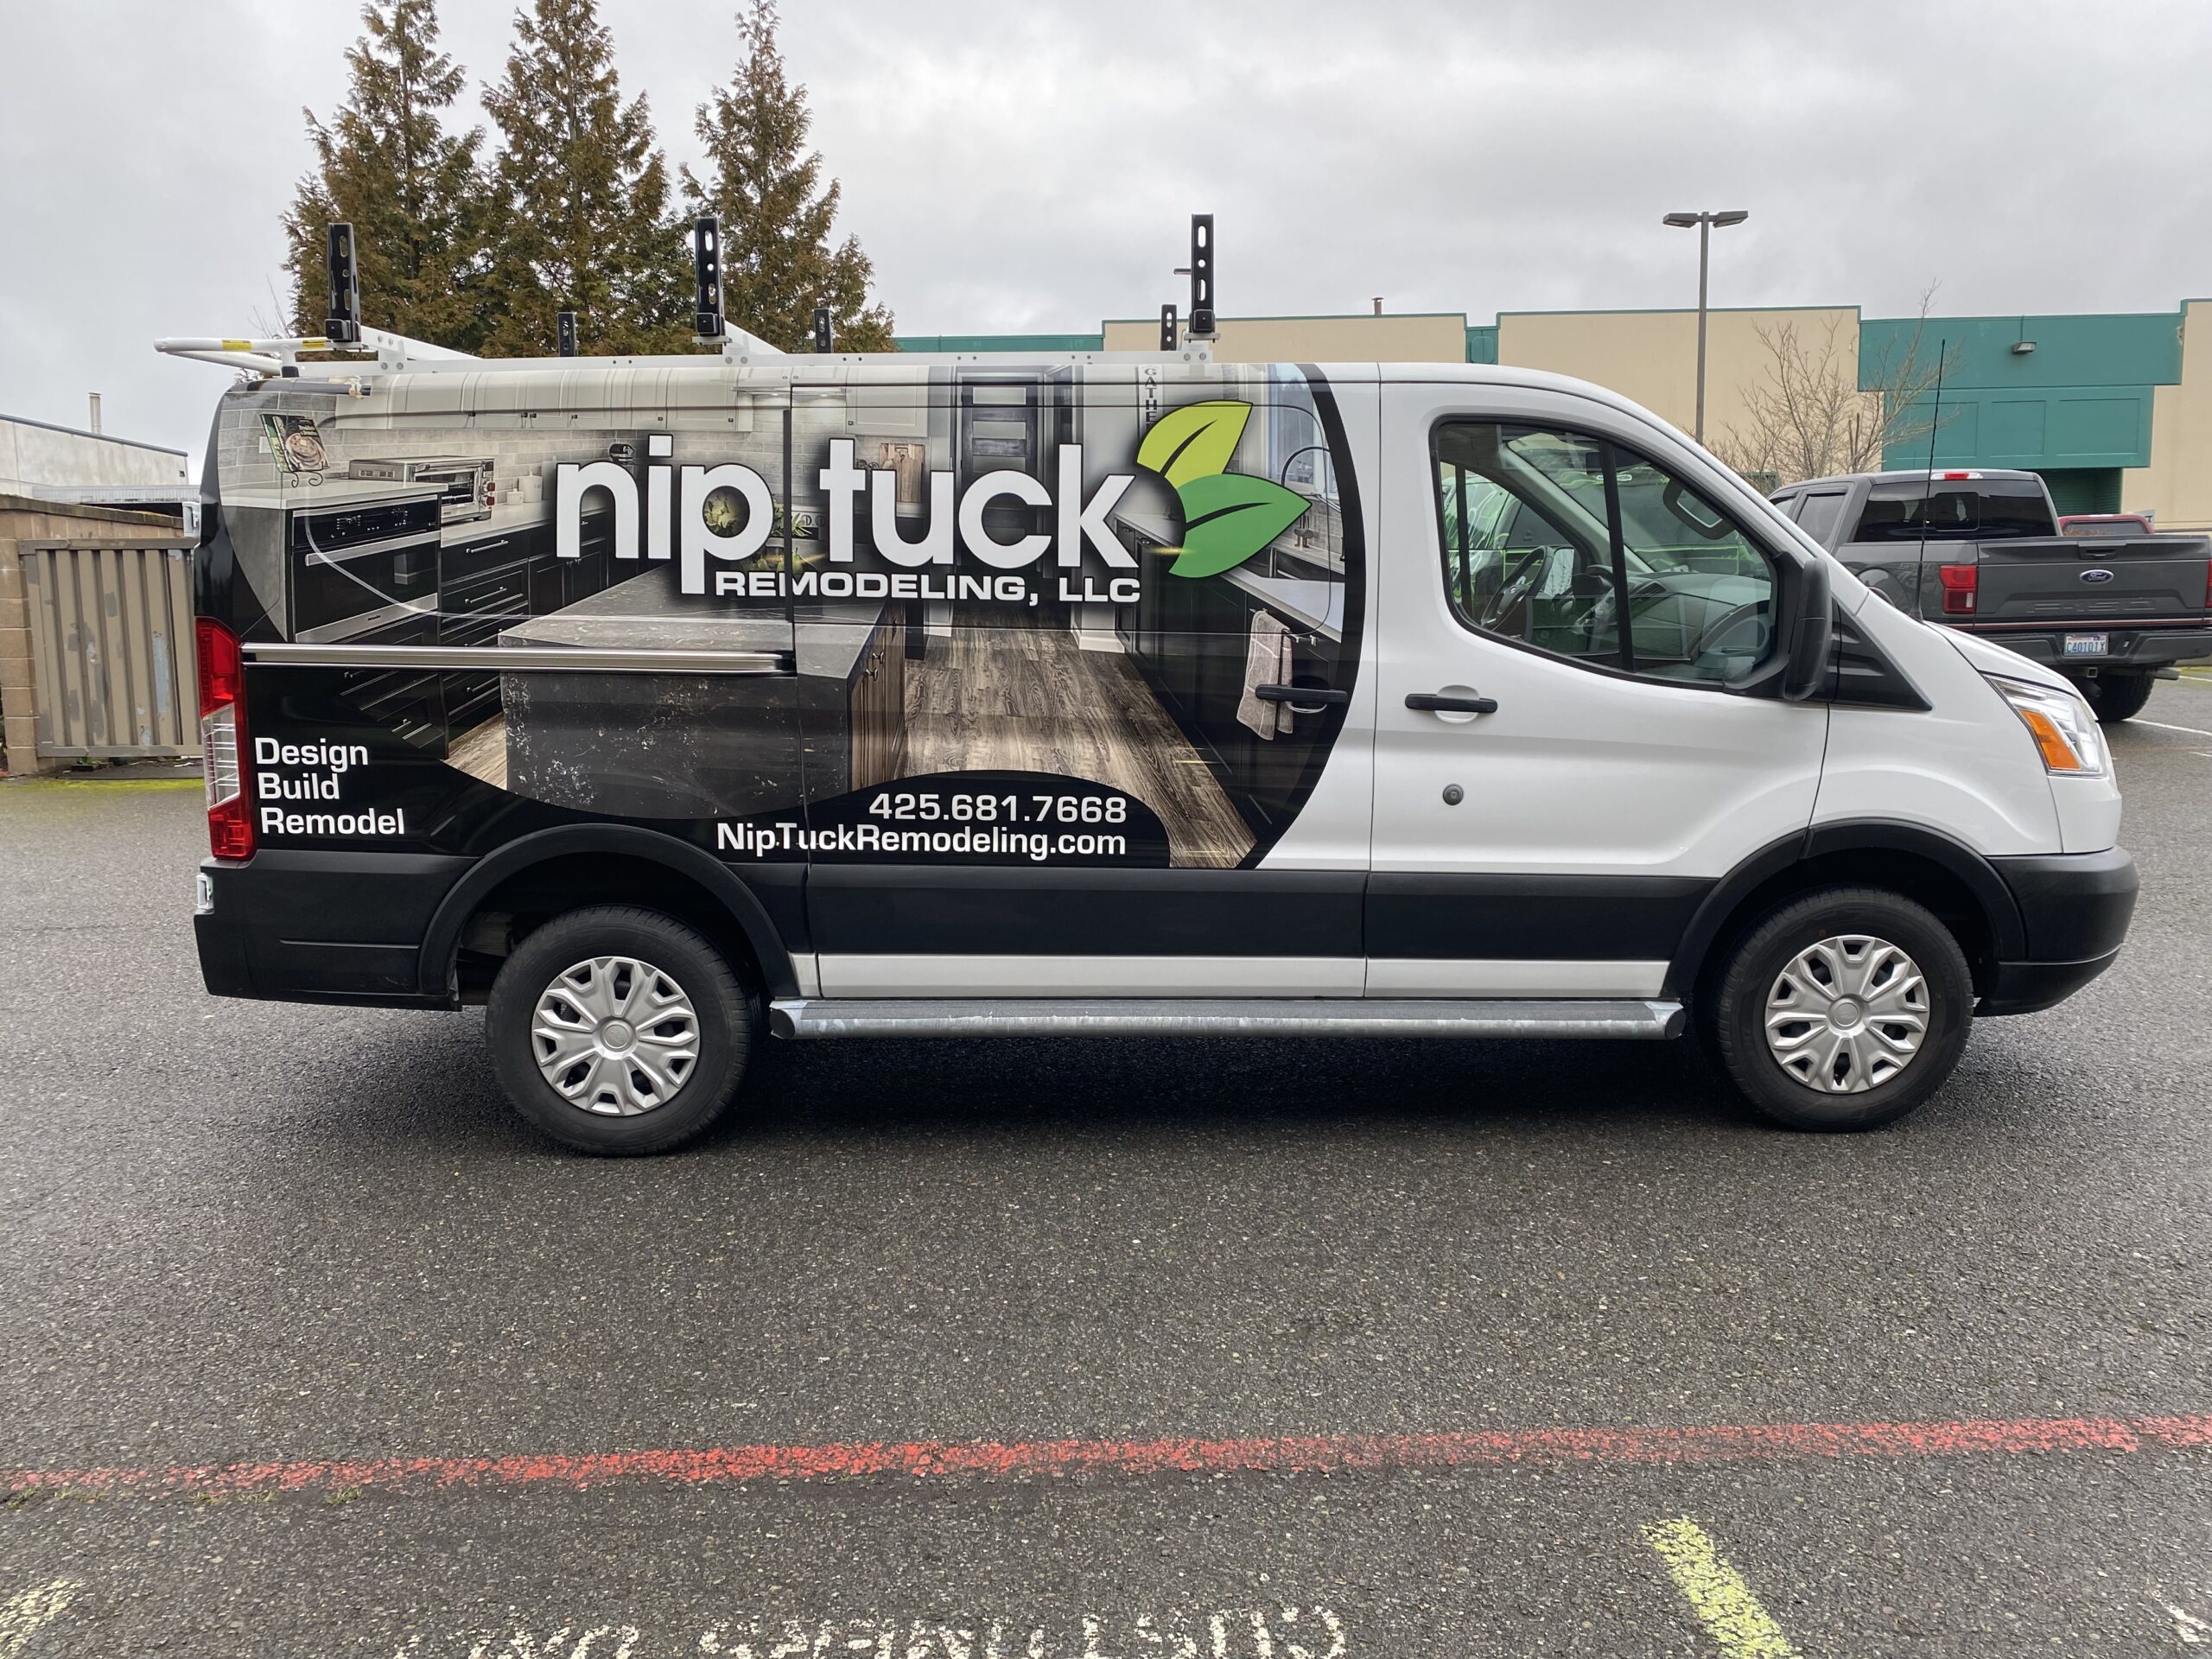 Nip Stuck Remodeling, LLC